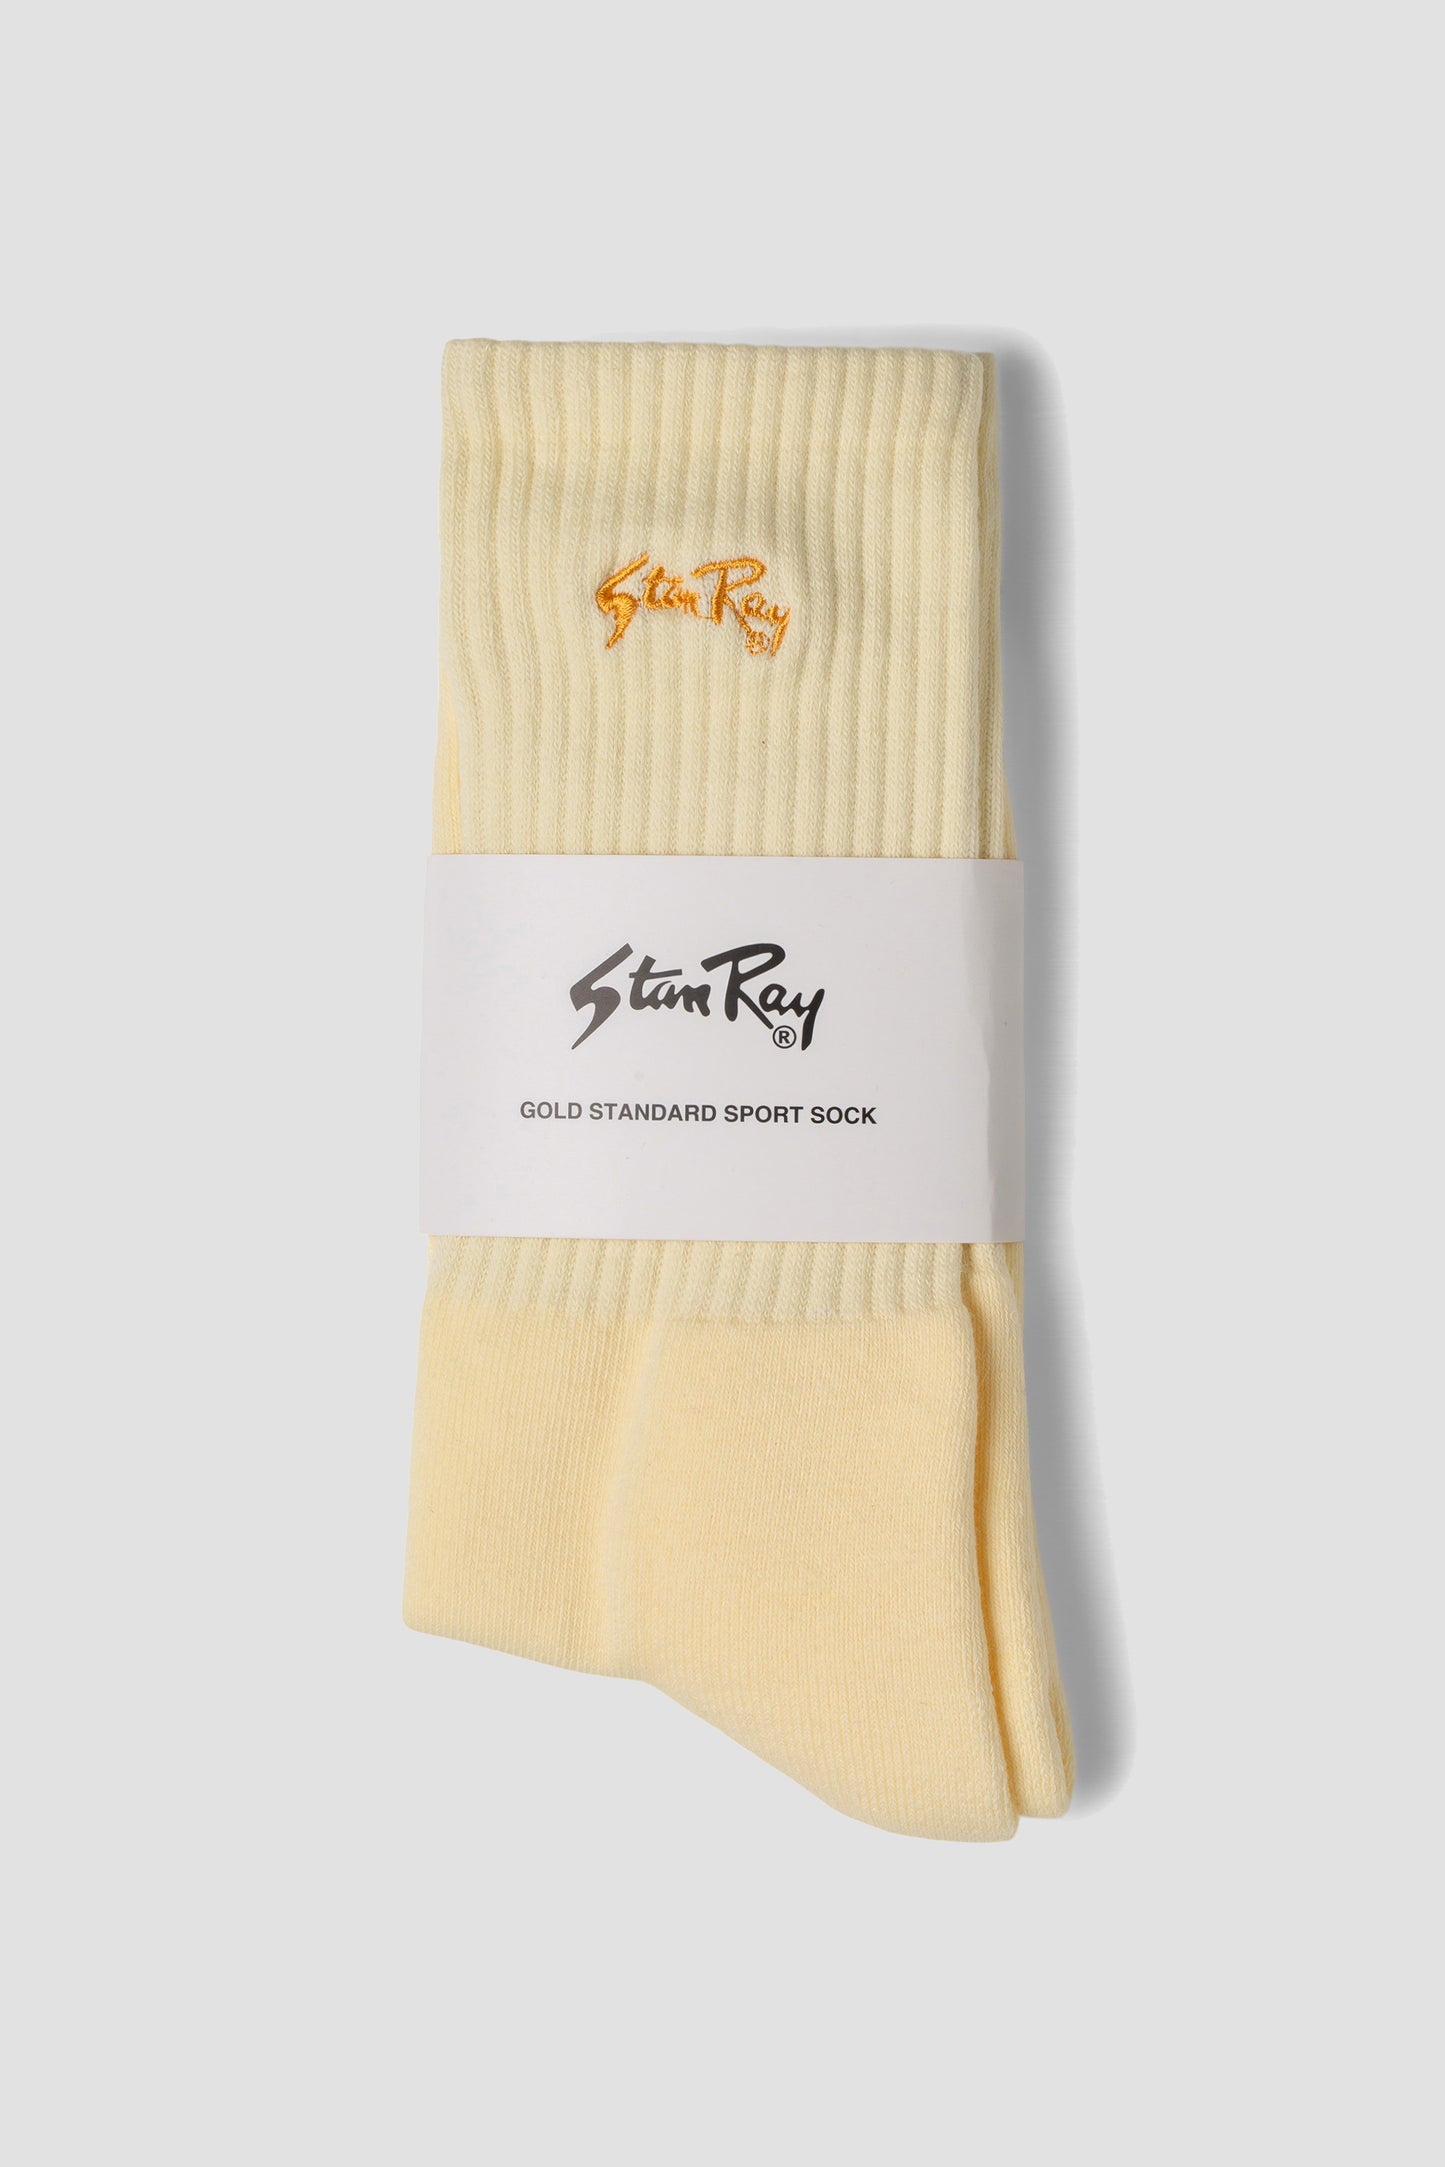 Gold Standard Sport Sock (Natural)